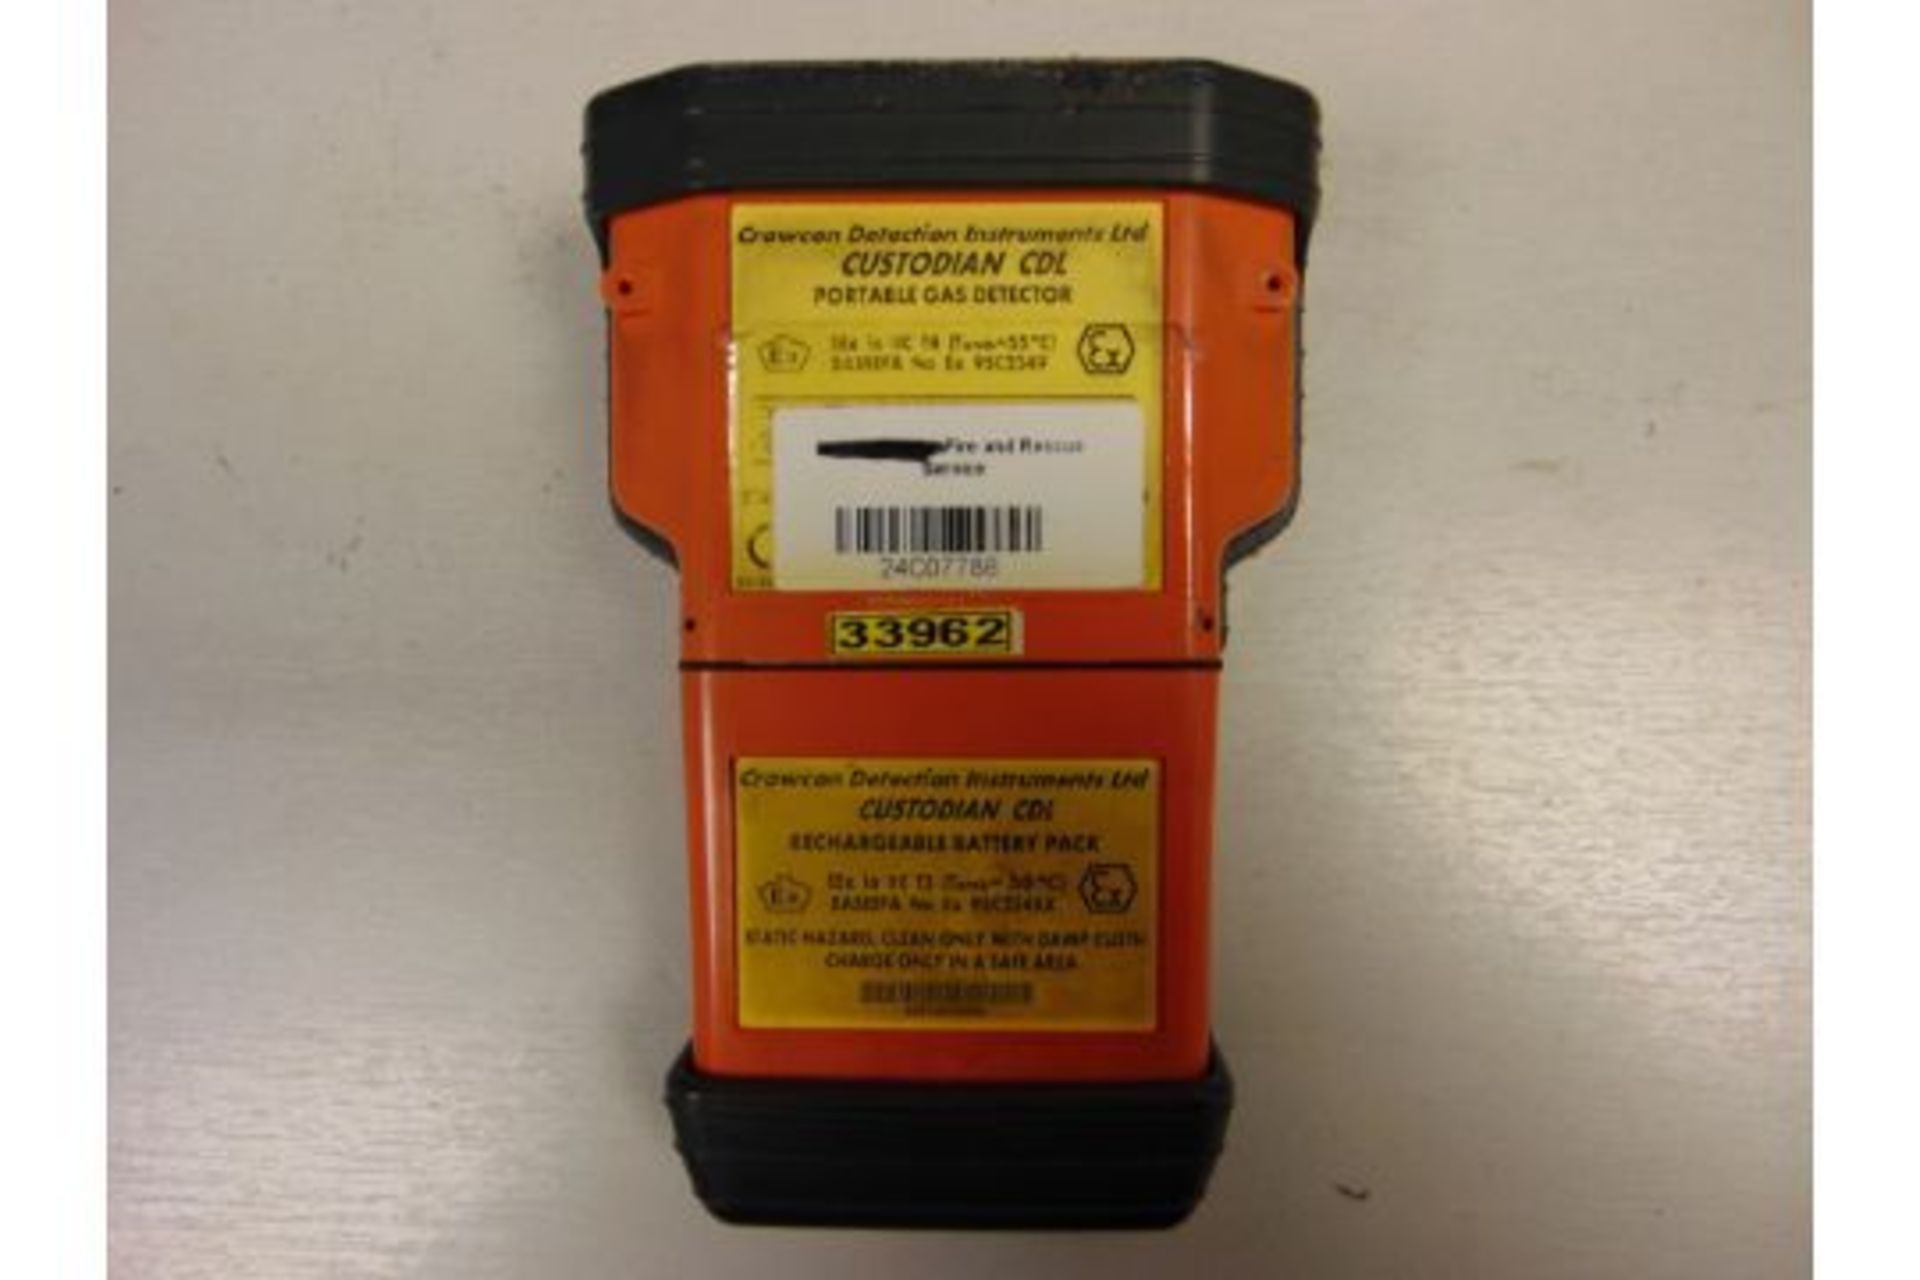 Crowcon Custodian CDL Portable Gas Monitor Kit - Image 2 of 4